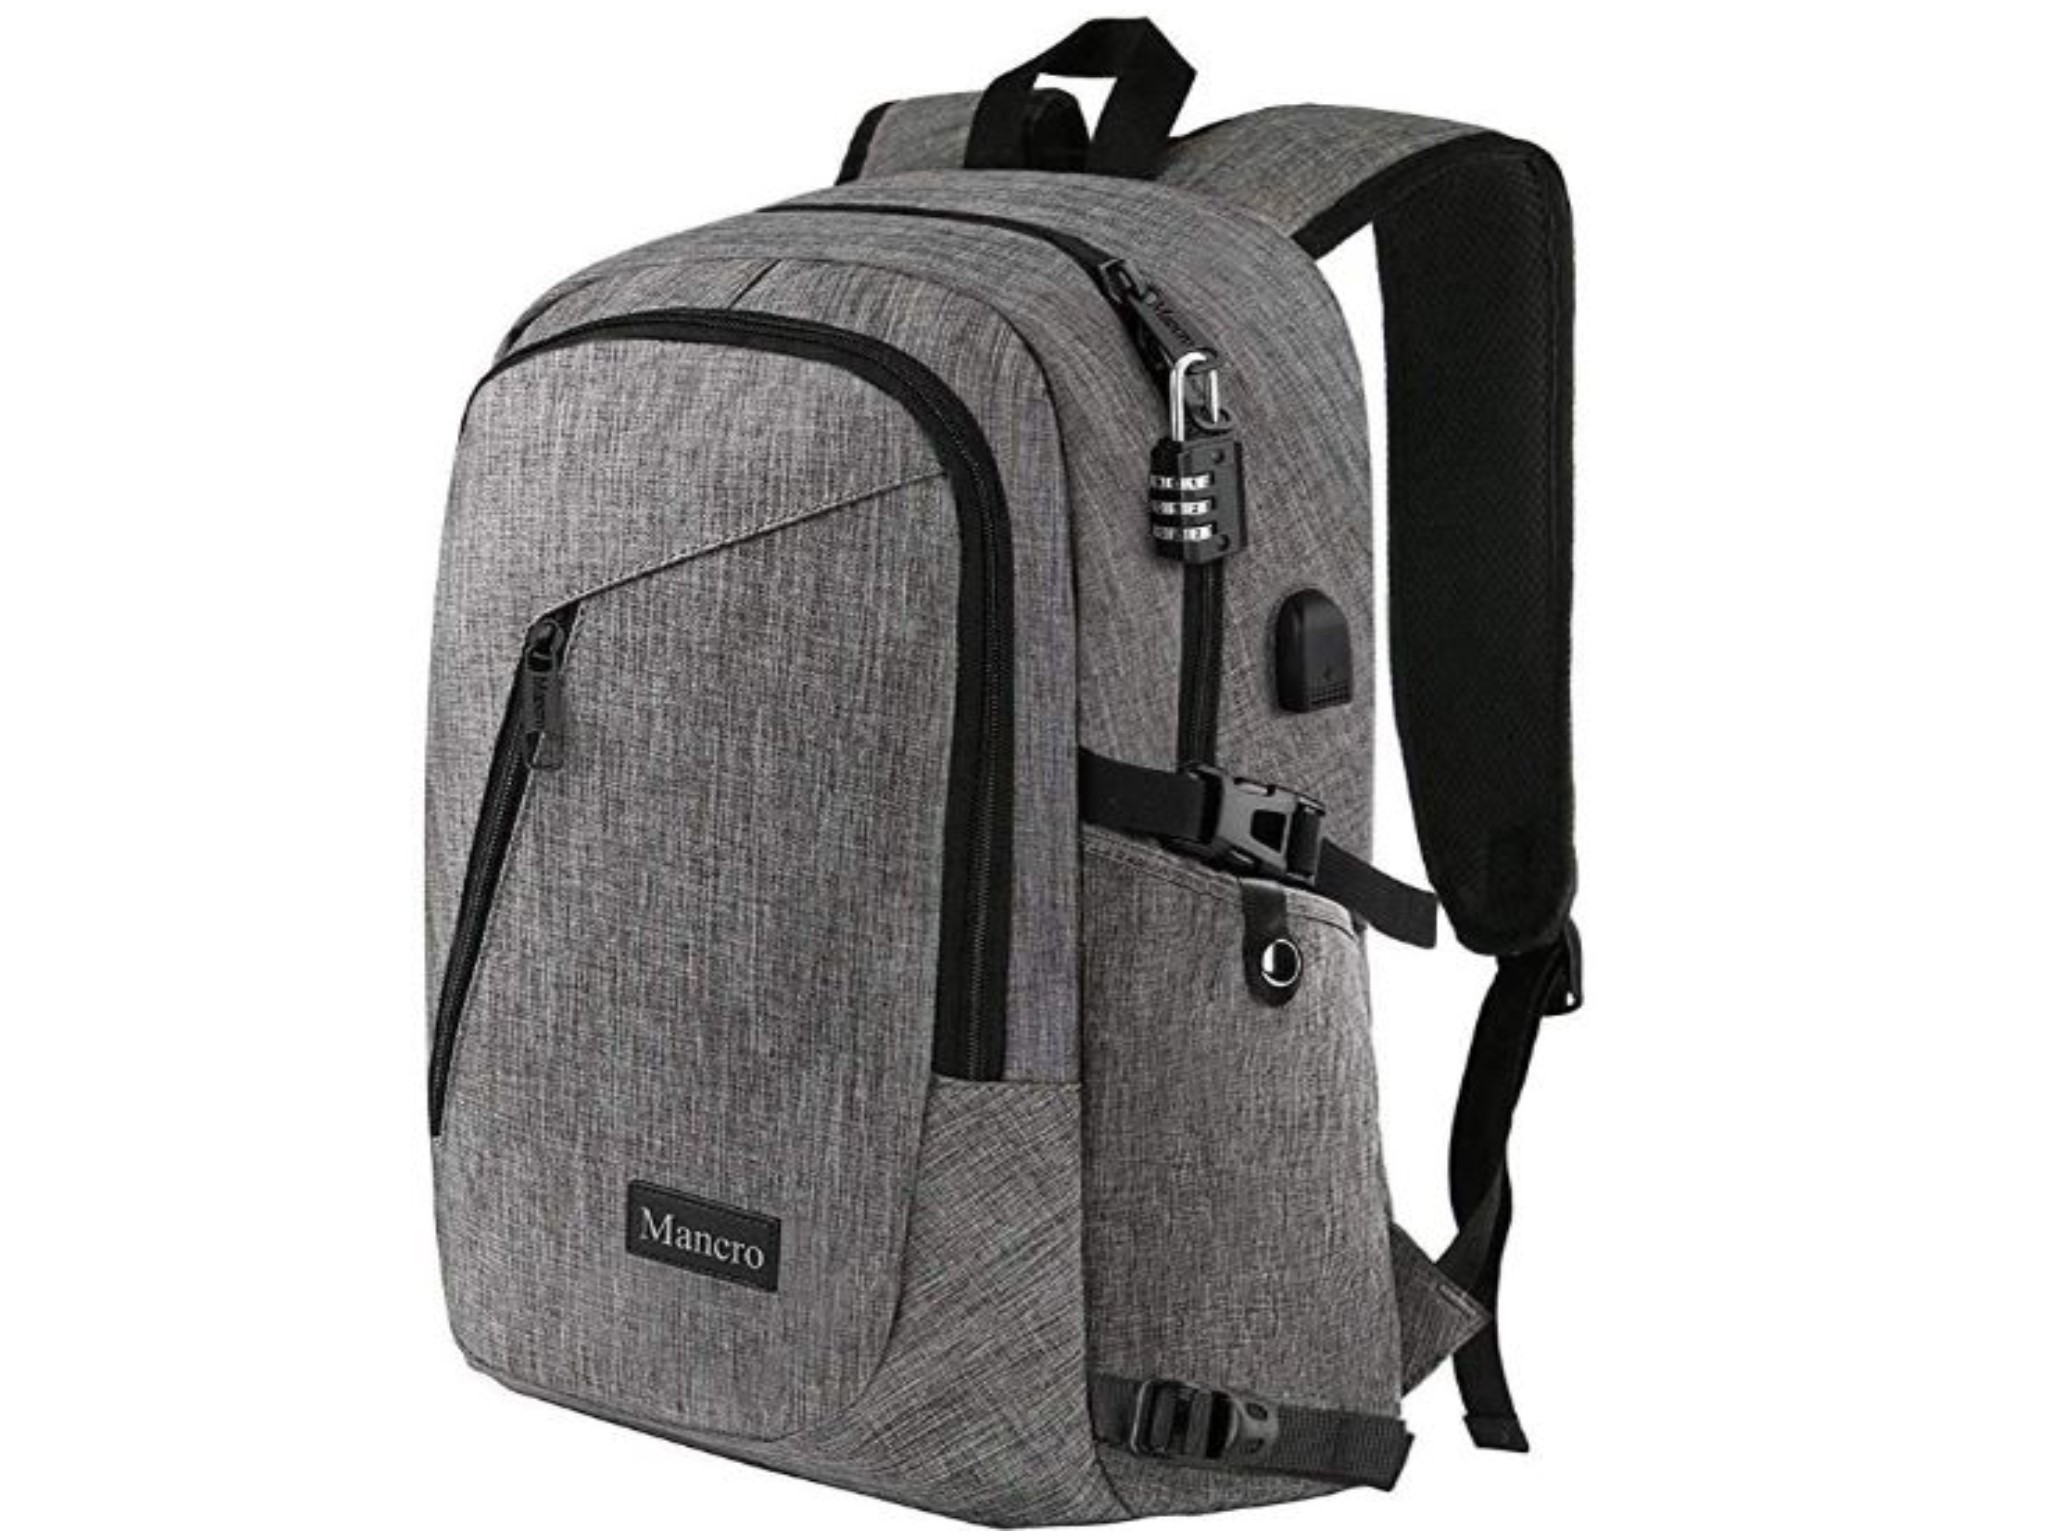 Westworld Where Everything is Possible Backpack Daypack Rucksack Laptop Shoulder Bag with USB Charging Port